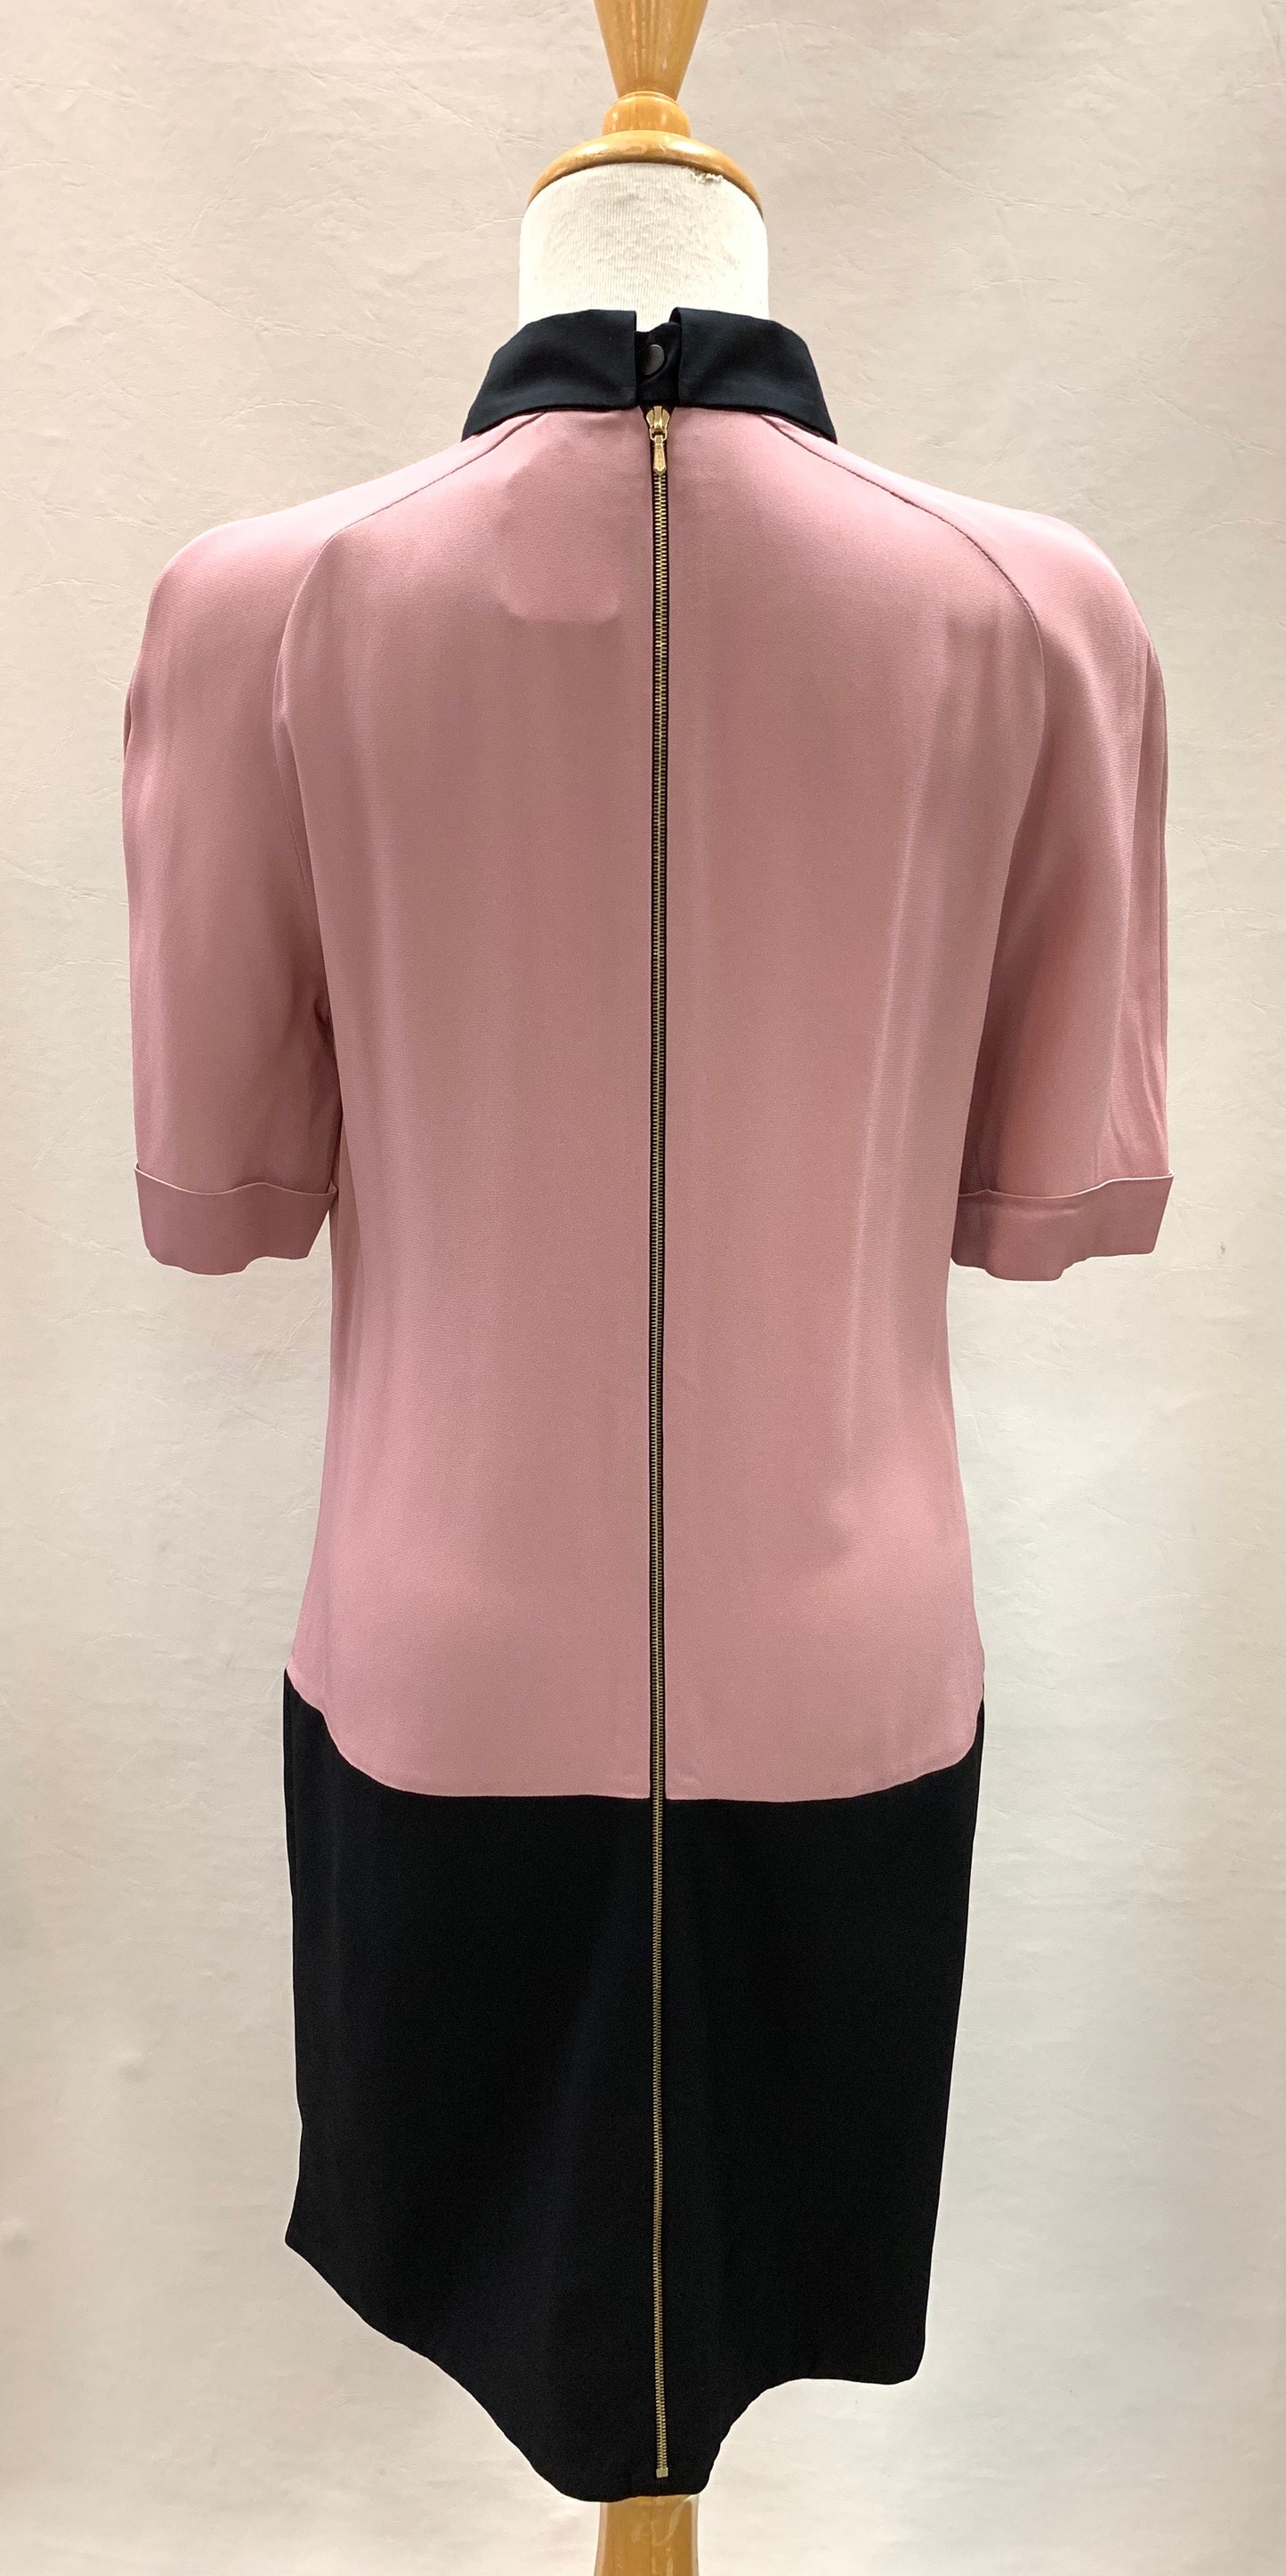 Authentic Victoria Beckham Pink and Black Raglan Contrast Collar Dress Sz 8